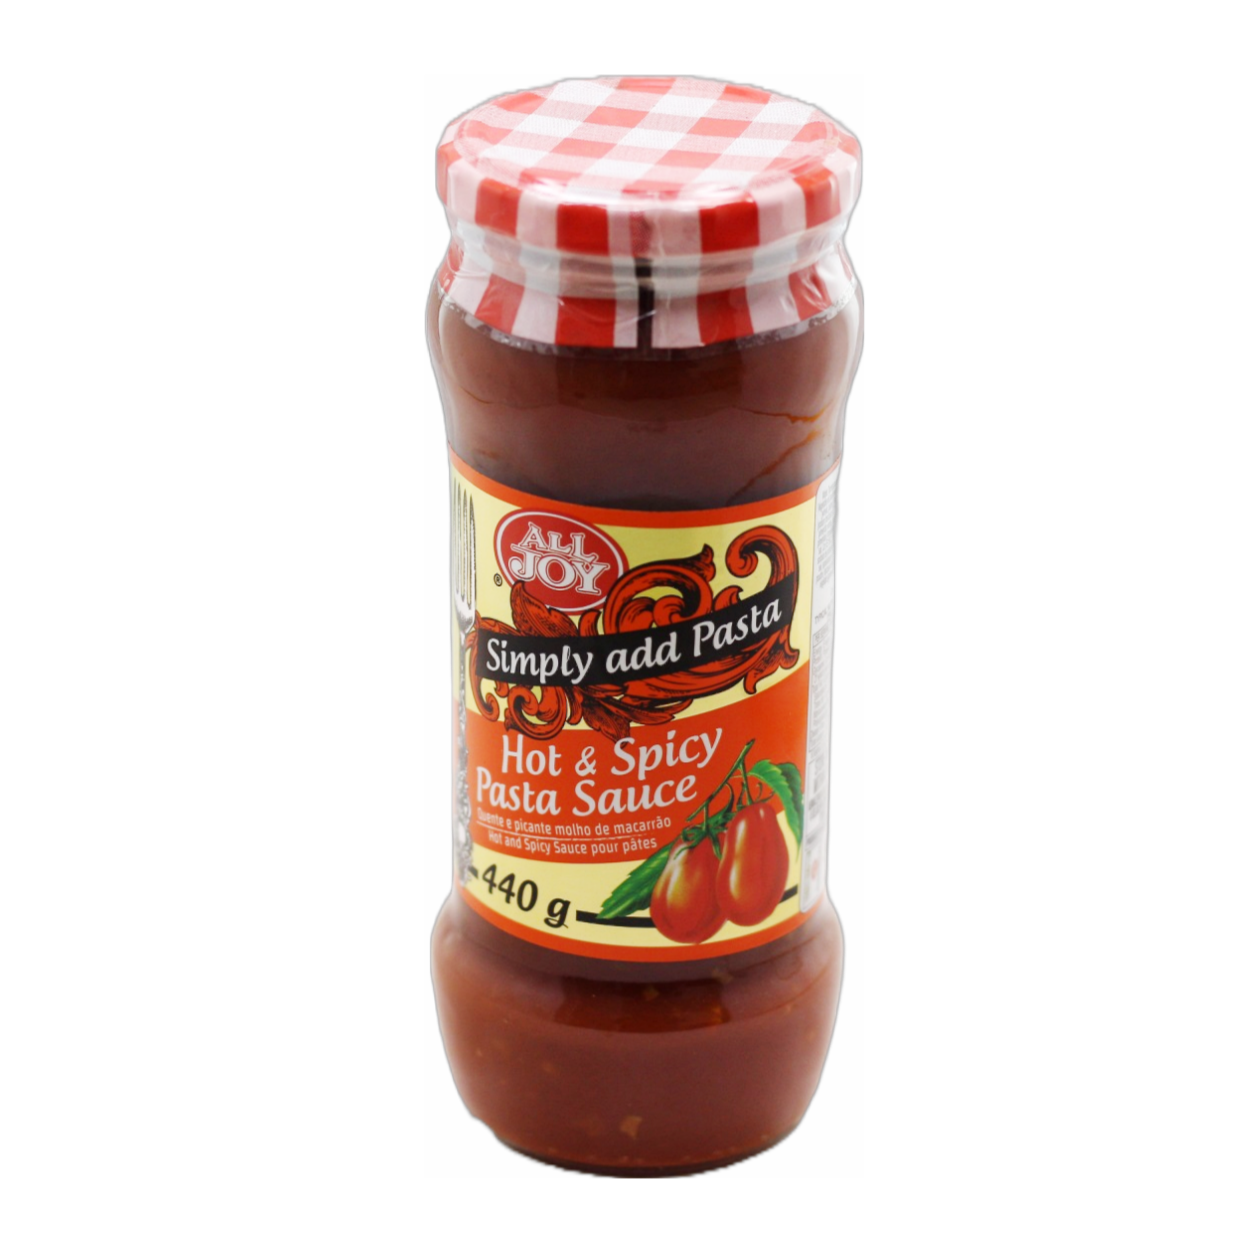 All Joy Hot & Spicy Pasta Sauce 440g